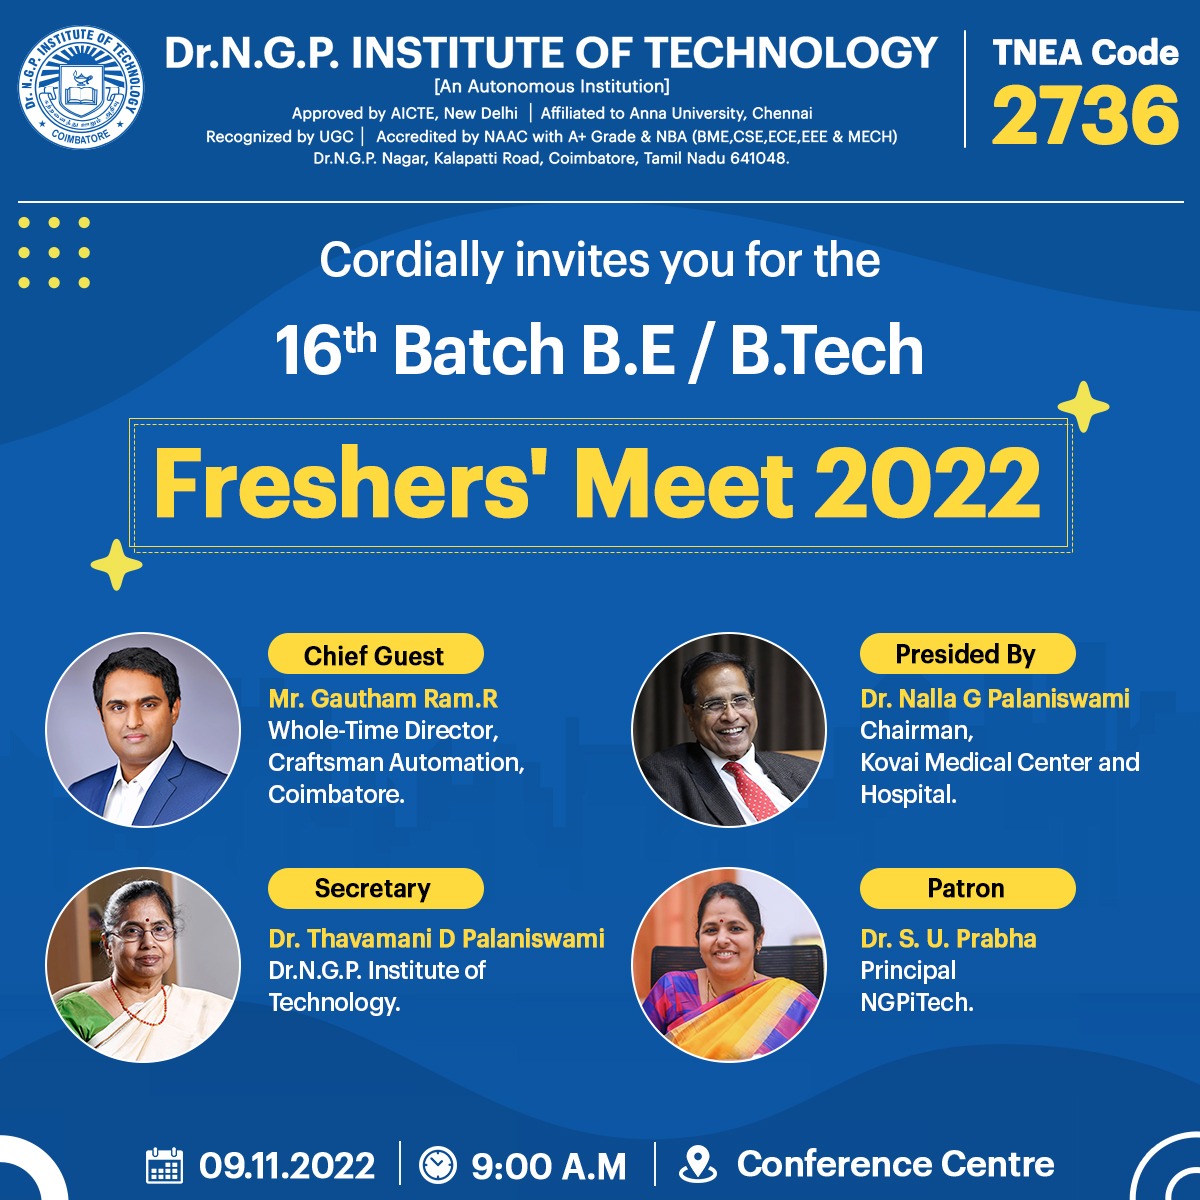 Freshers' Meet 2022